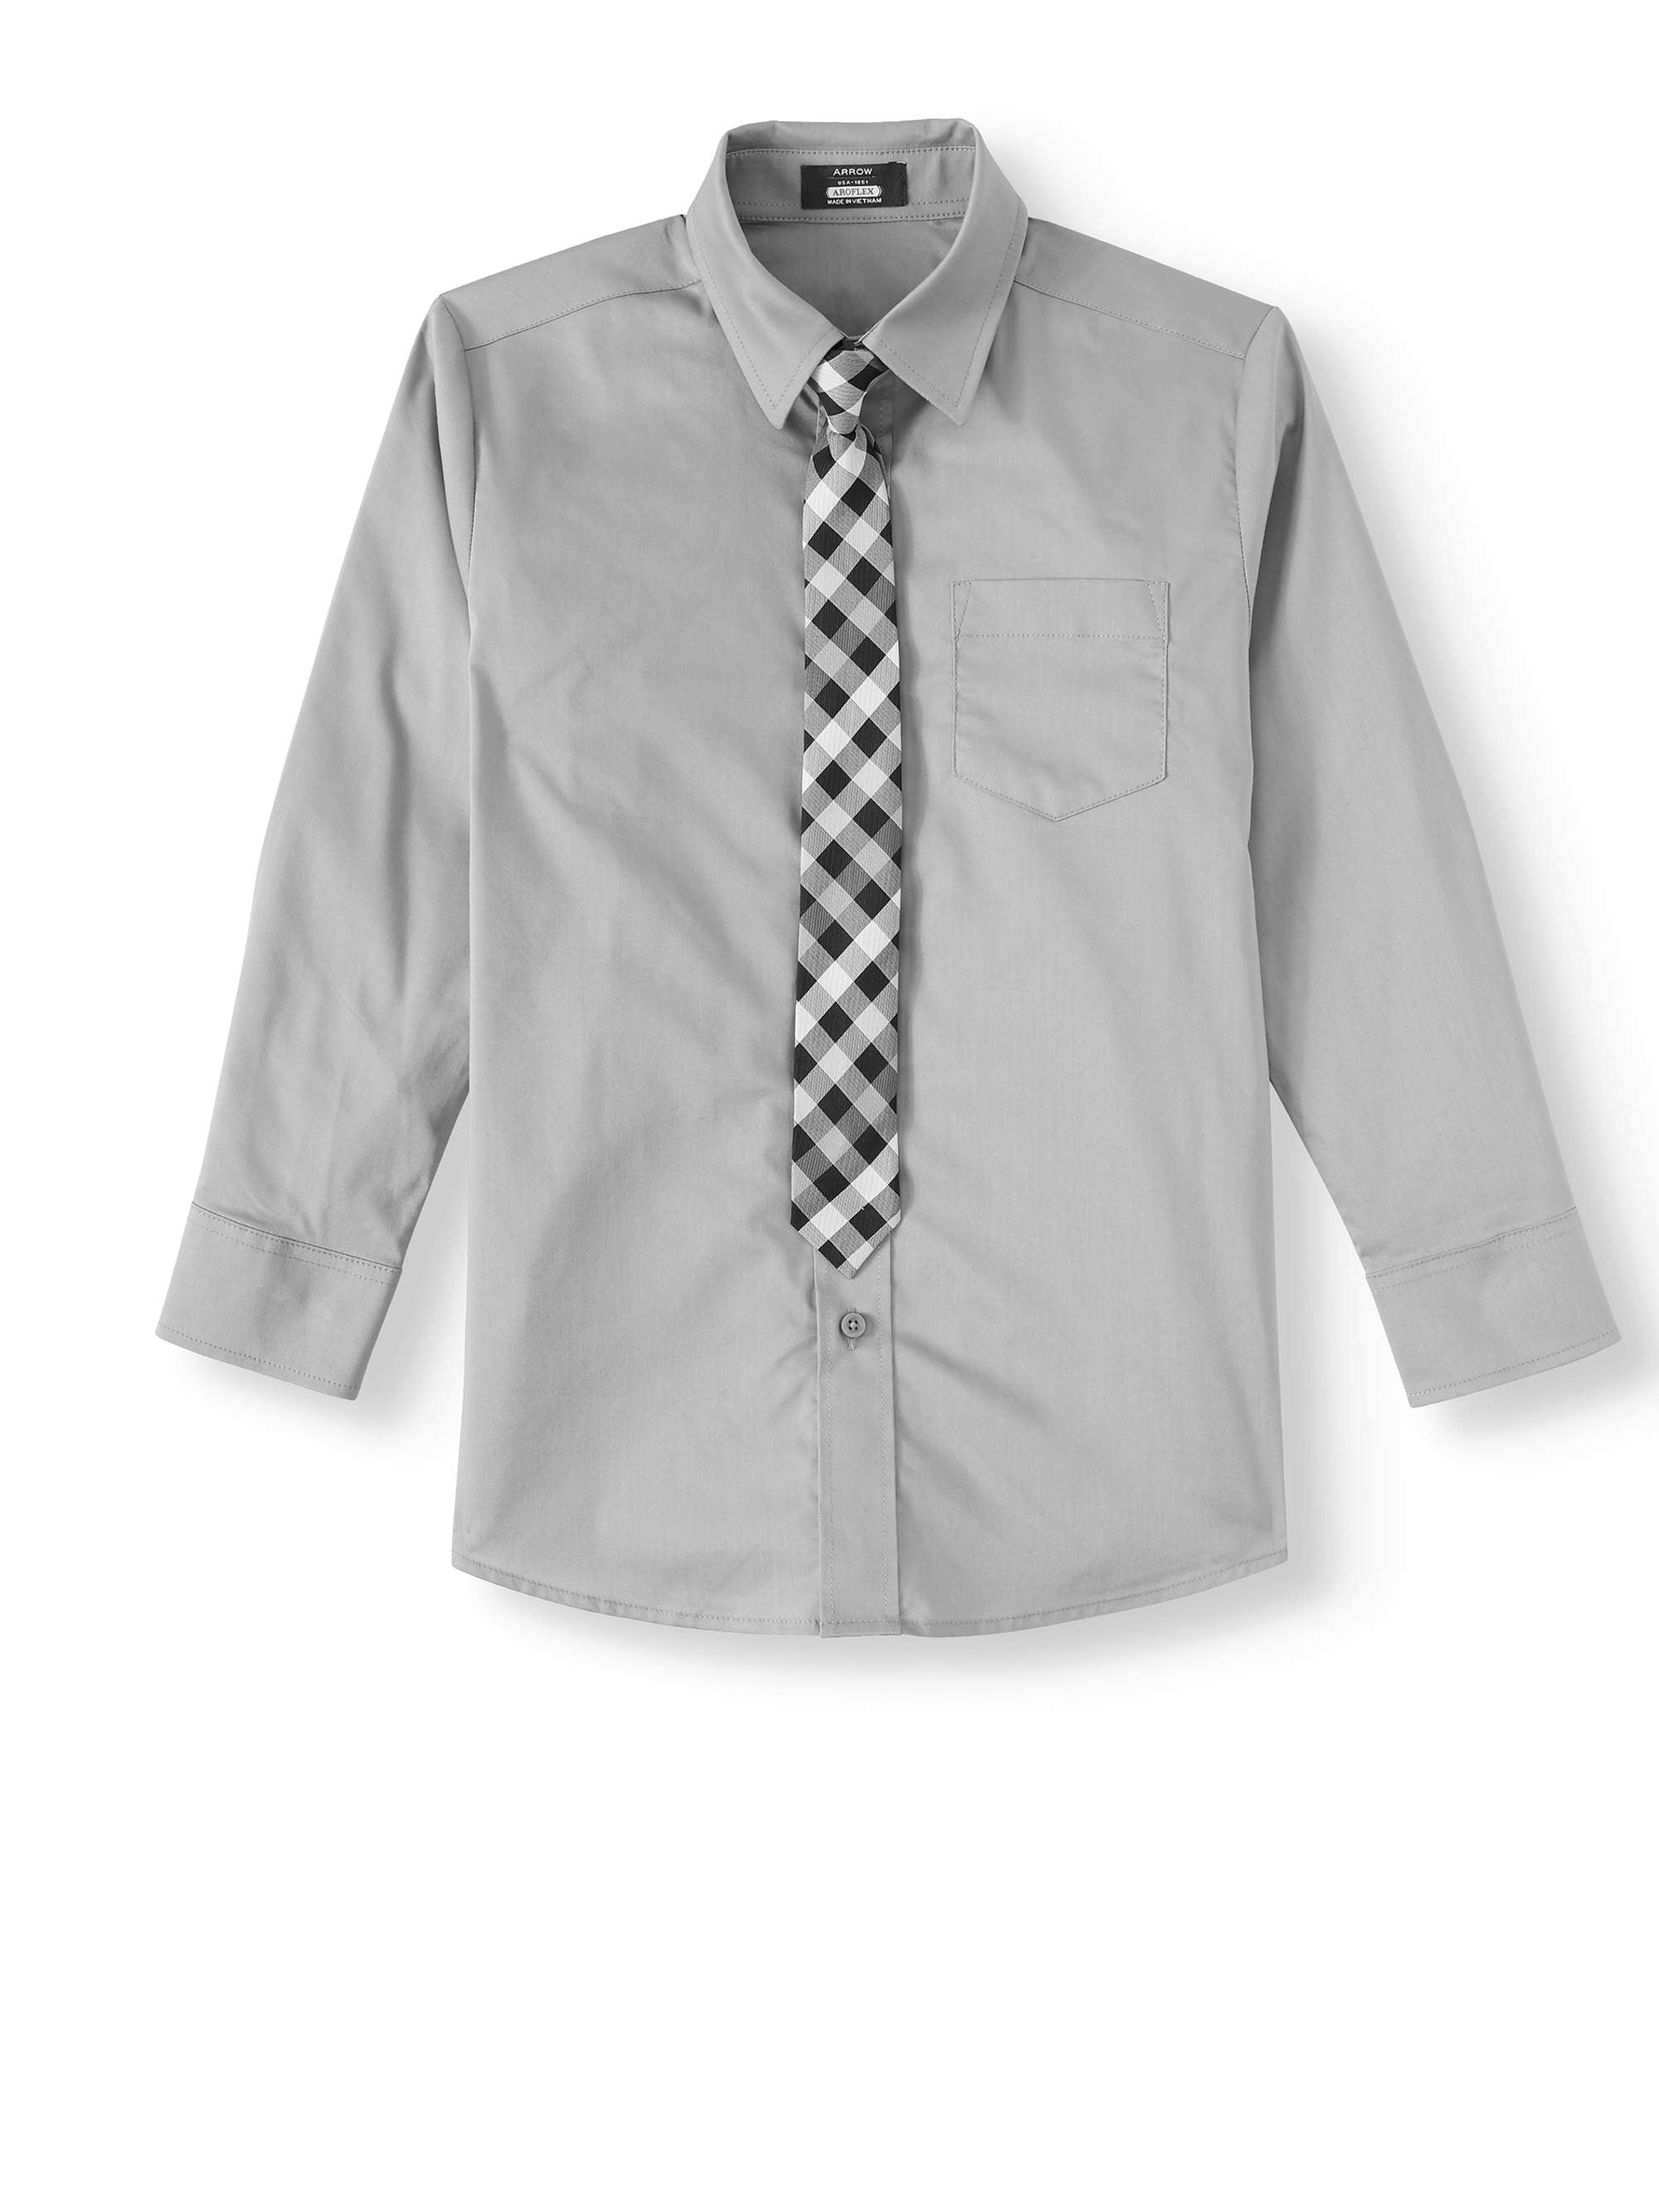 Boys White Uniform or Dress Shirts w/ Ties Size 4-18 